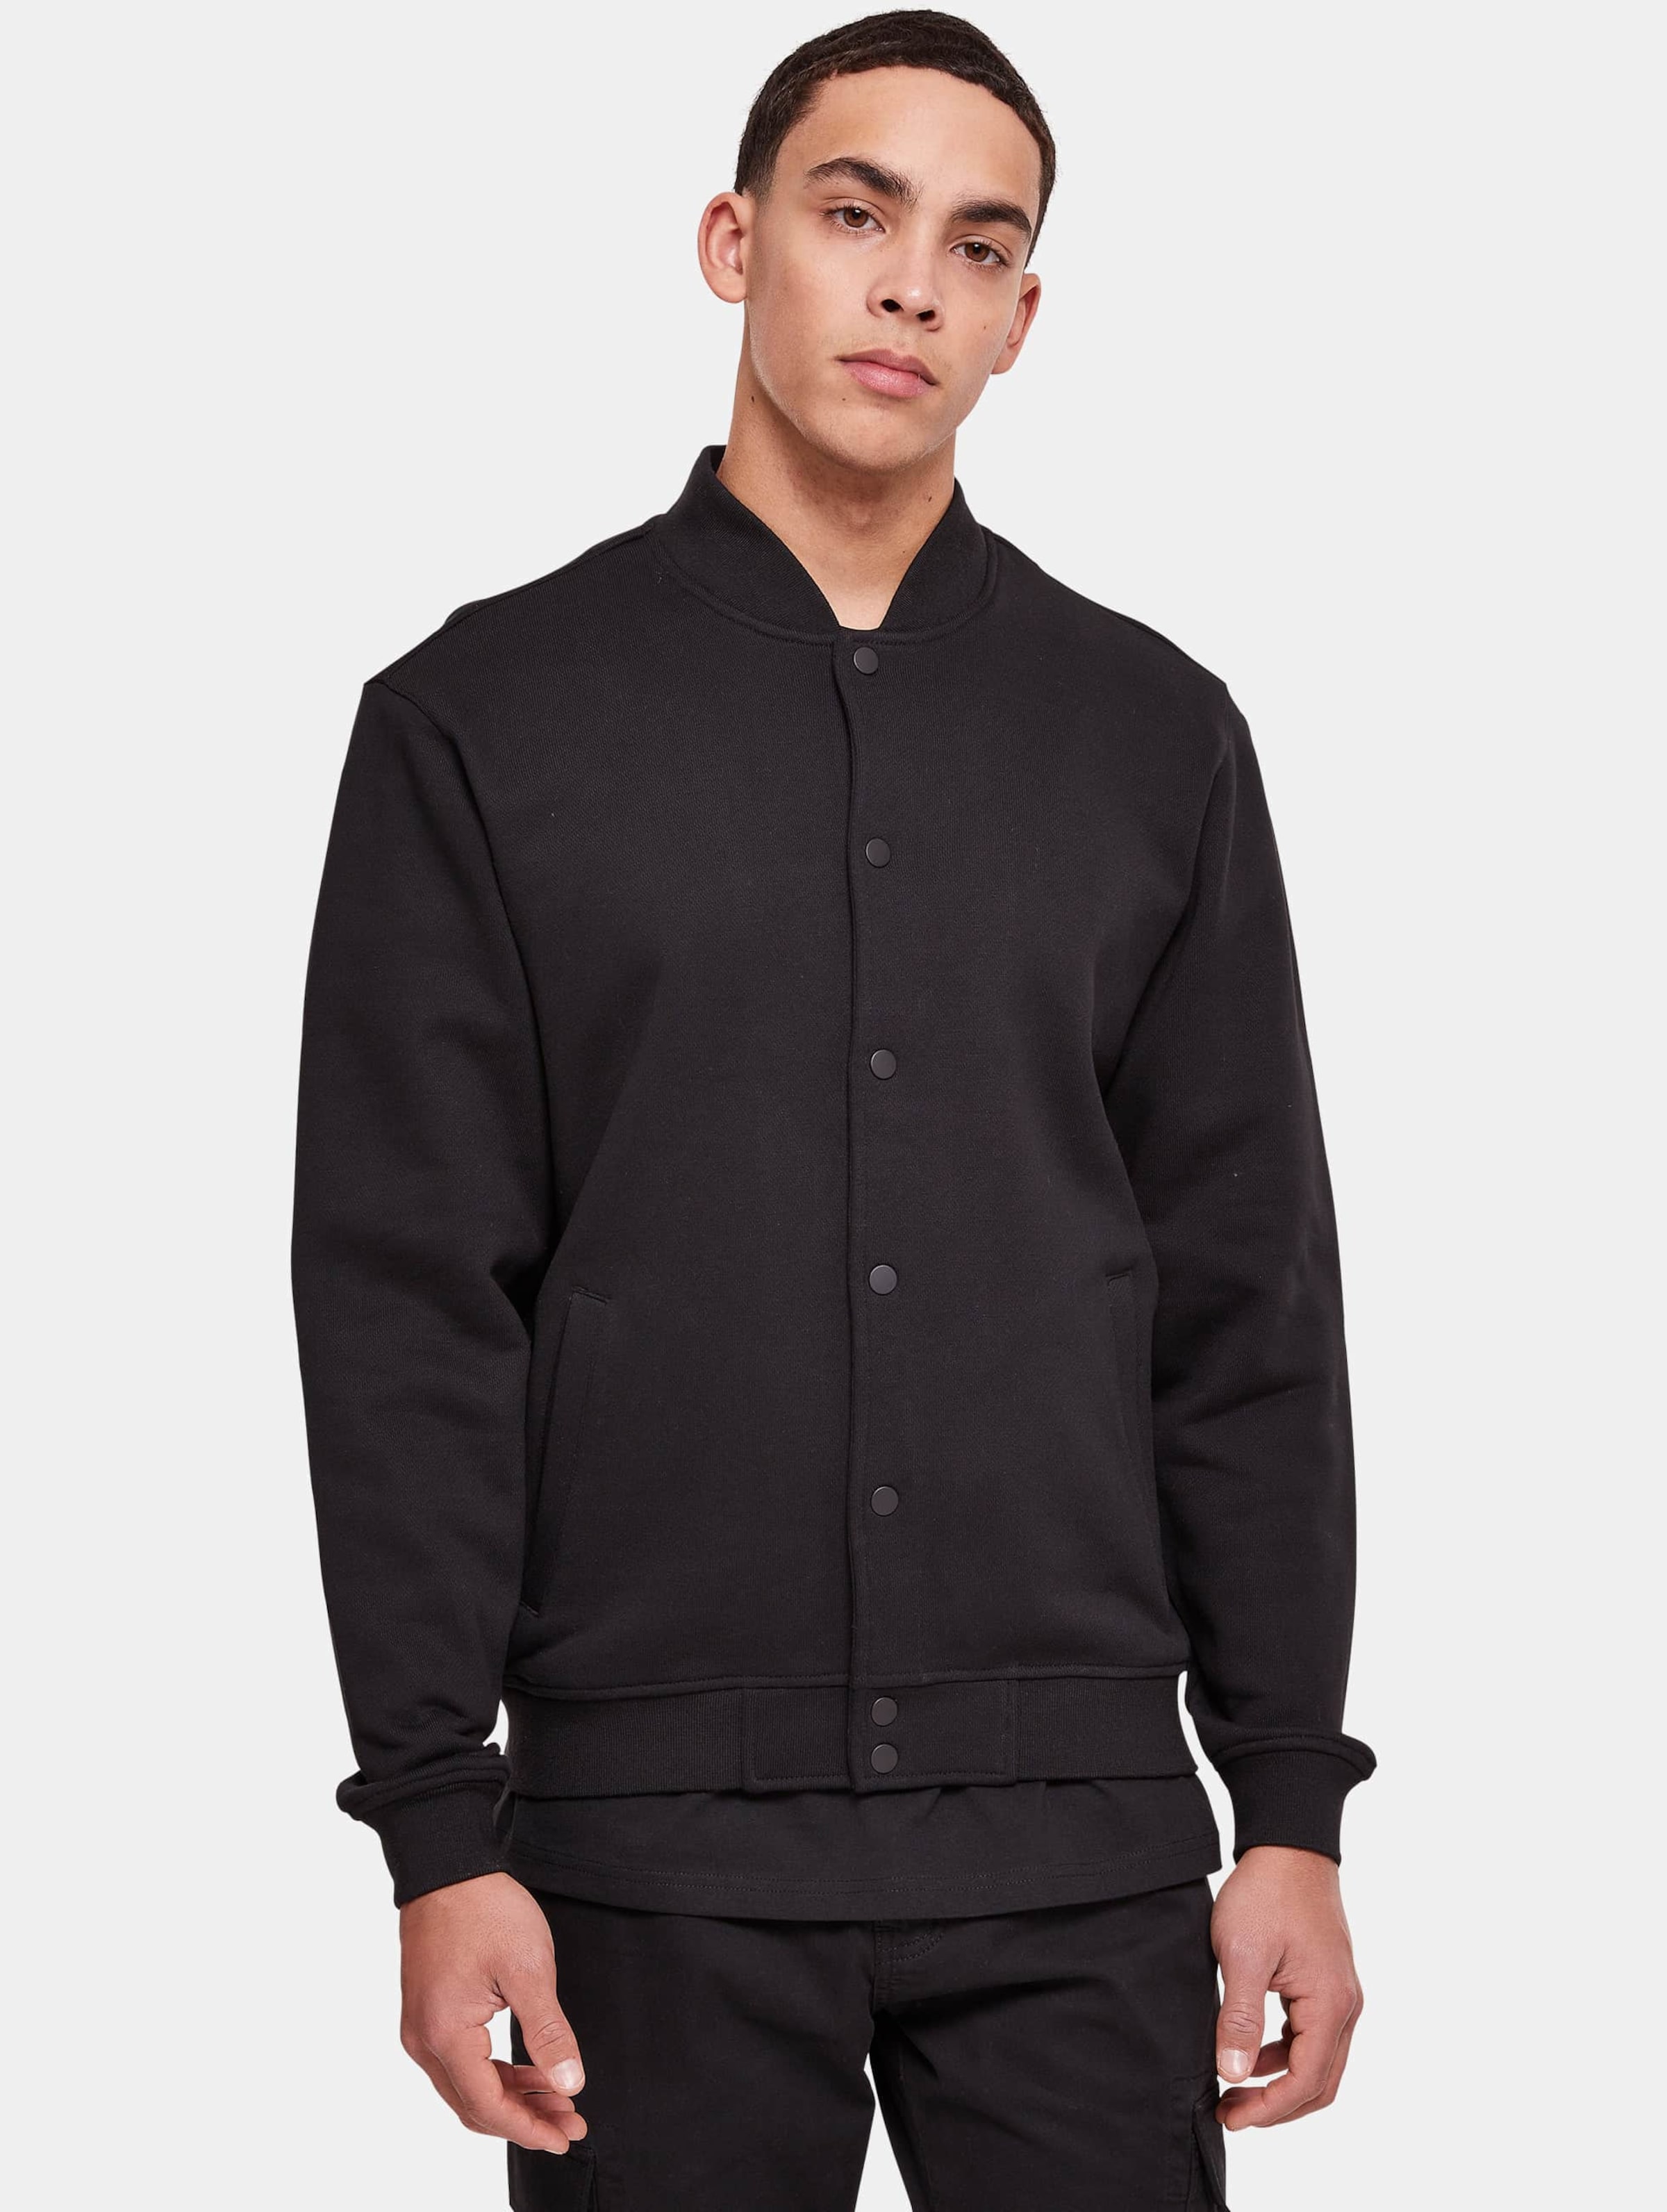 Urban Classics - Ultra Heavy Solid College jacket - 4XL - Zwart